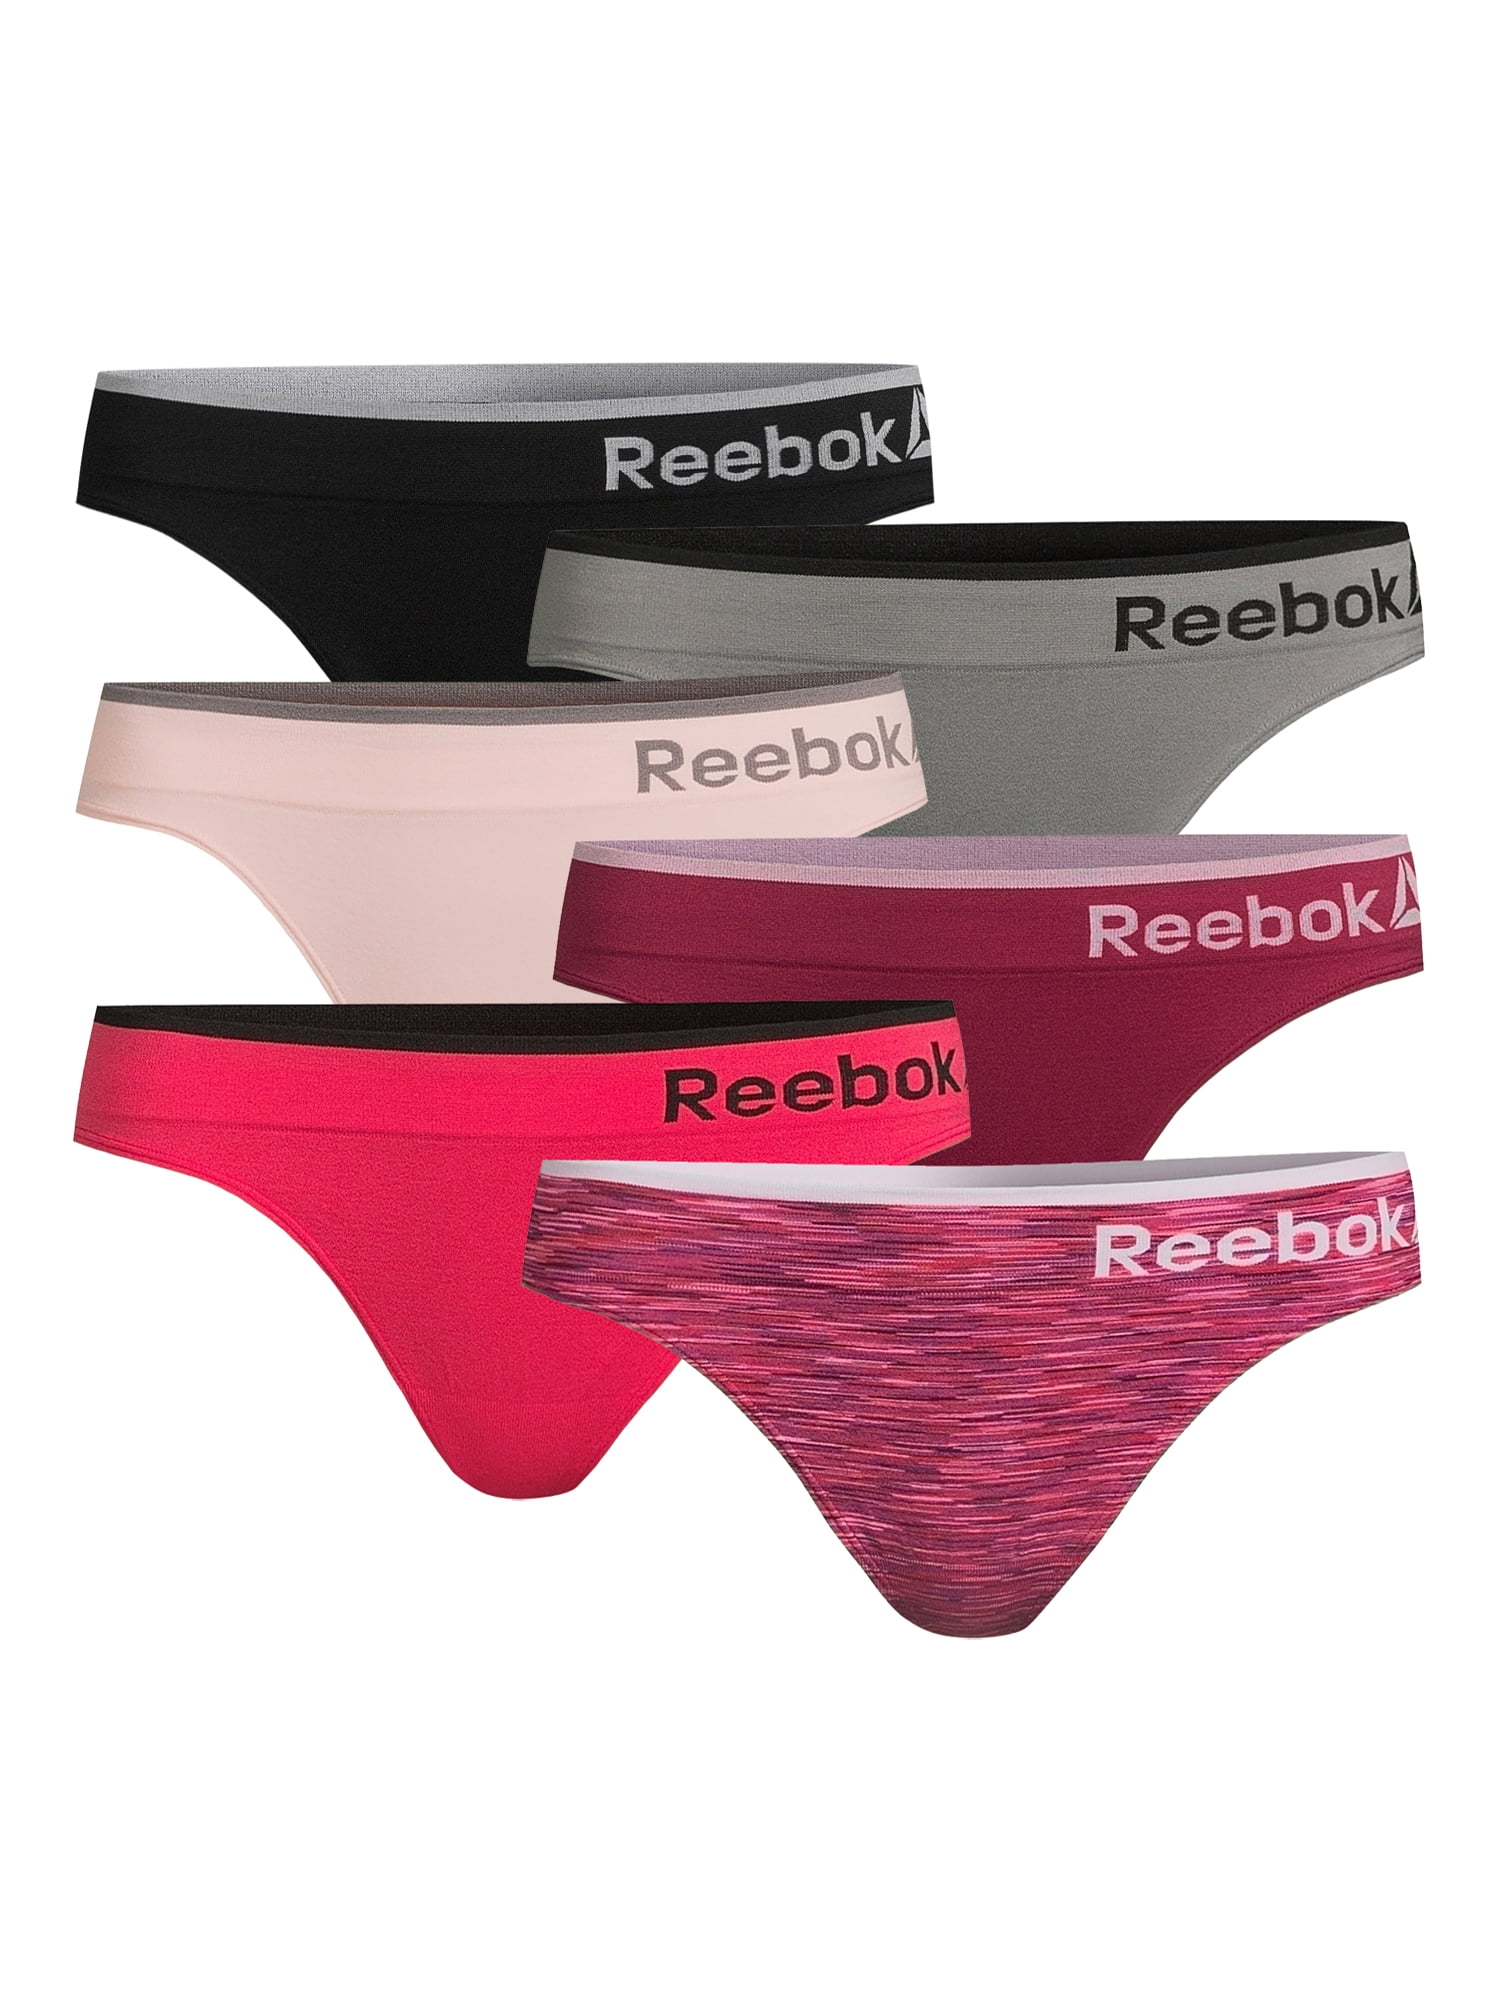 XL Reebok Seamless Thongs Womens Underwear 3 Pack Performance